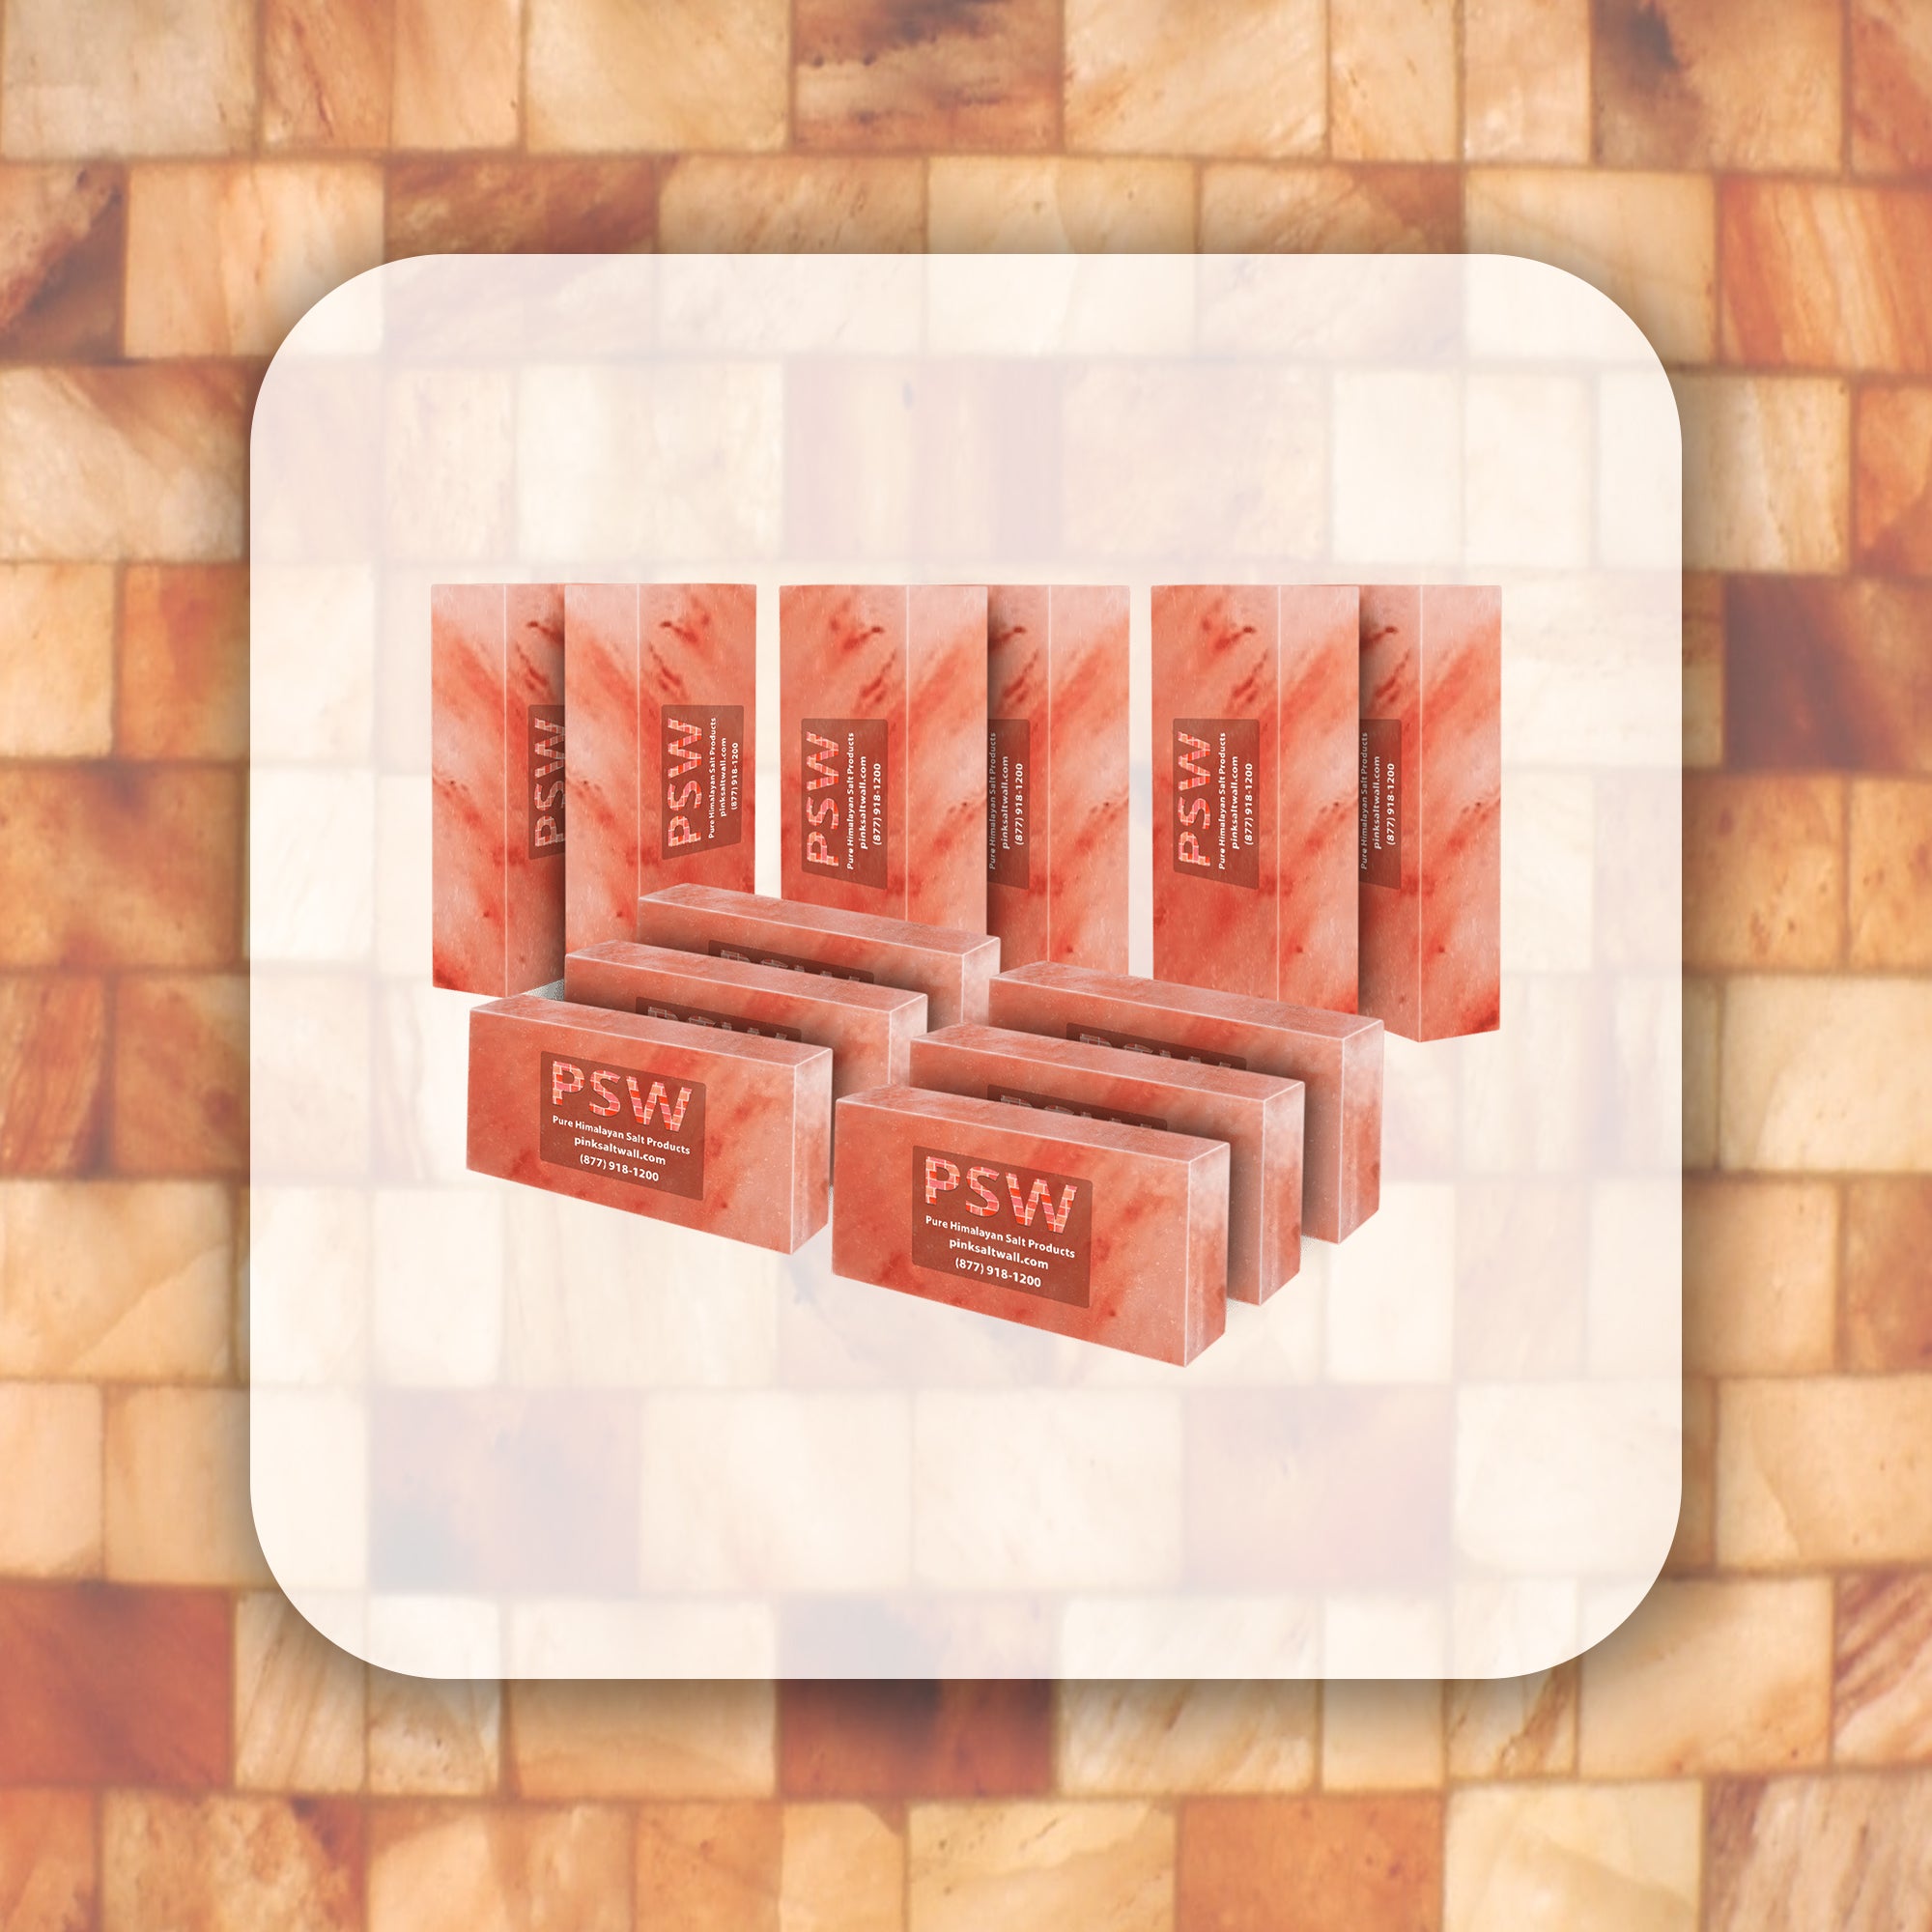 Salt Bricks 8" x 4" x 2" - Pack of 70 with Free Salt Lamp